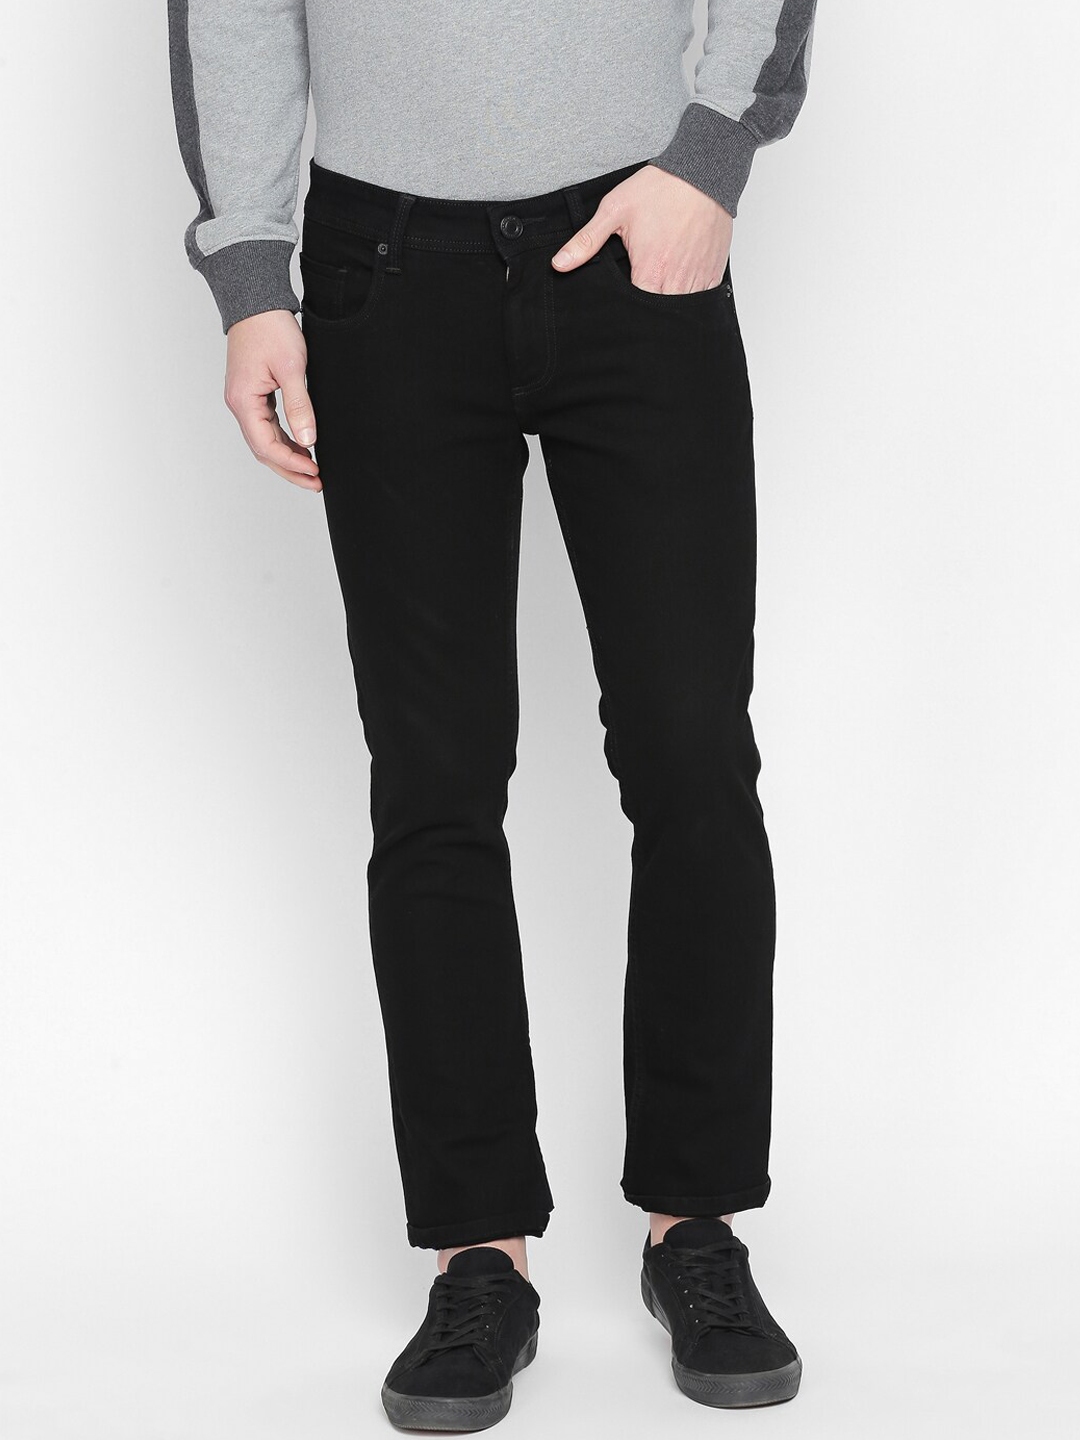 Buy Basics Men Black Slim Fit Jeans - Jeans for Men 14019658 | Myntra